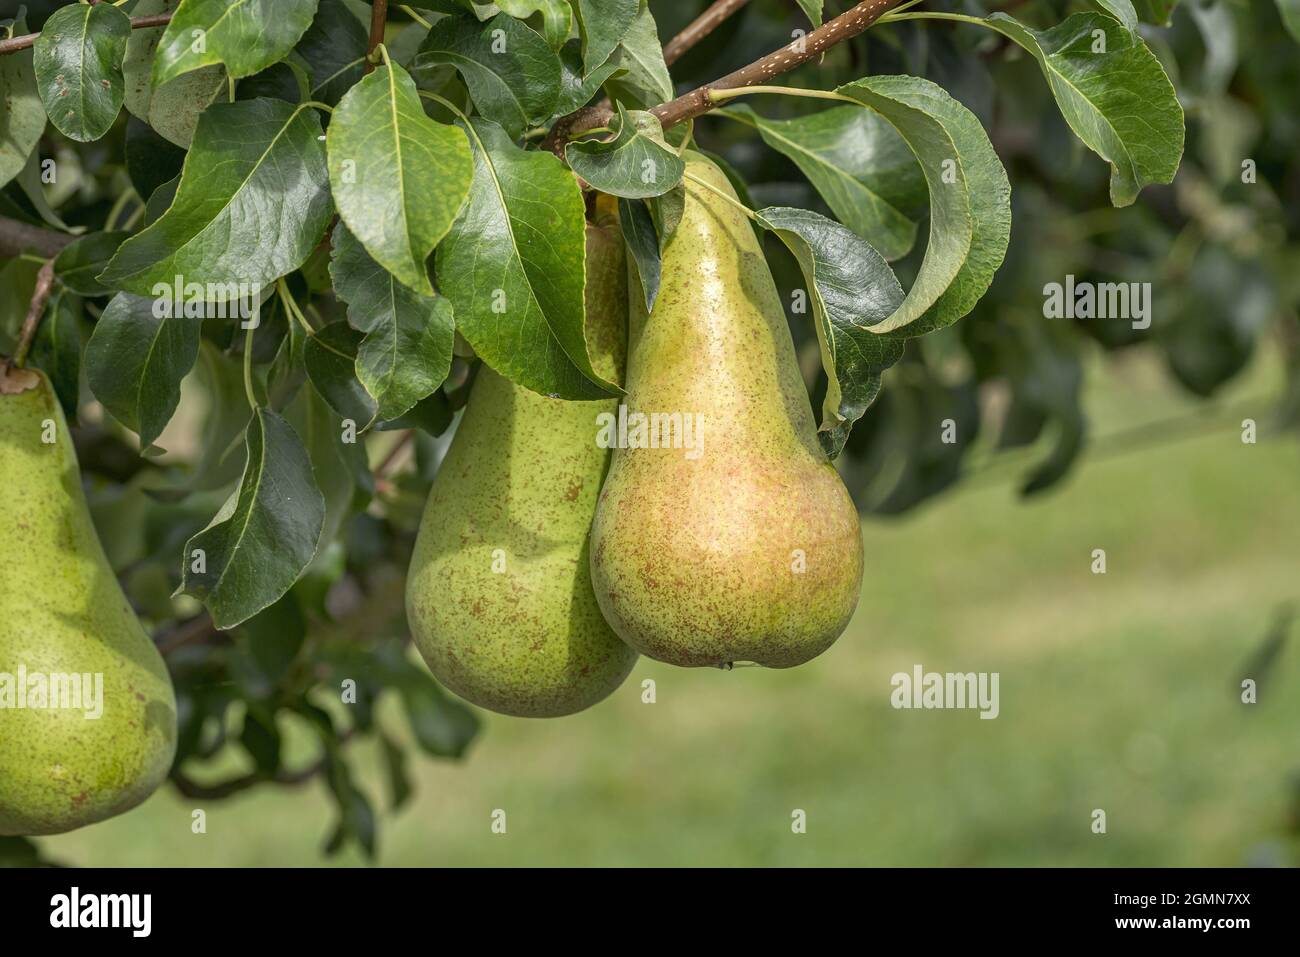 https://c8.alamy.com/comp/2GMN7XX/common-pear-pyrus-communis-concorde-pyrus-communis-concorde-pear-on-a-tree-cultivar-concorde-2GMN7XX.jpg